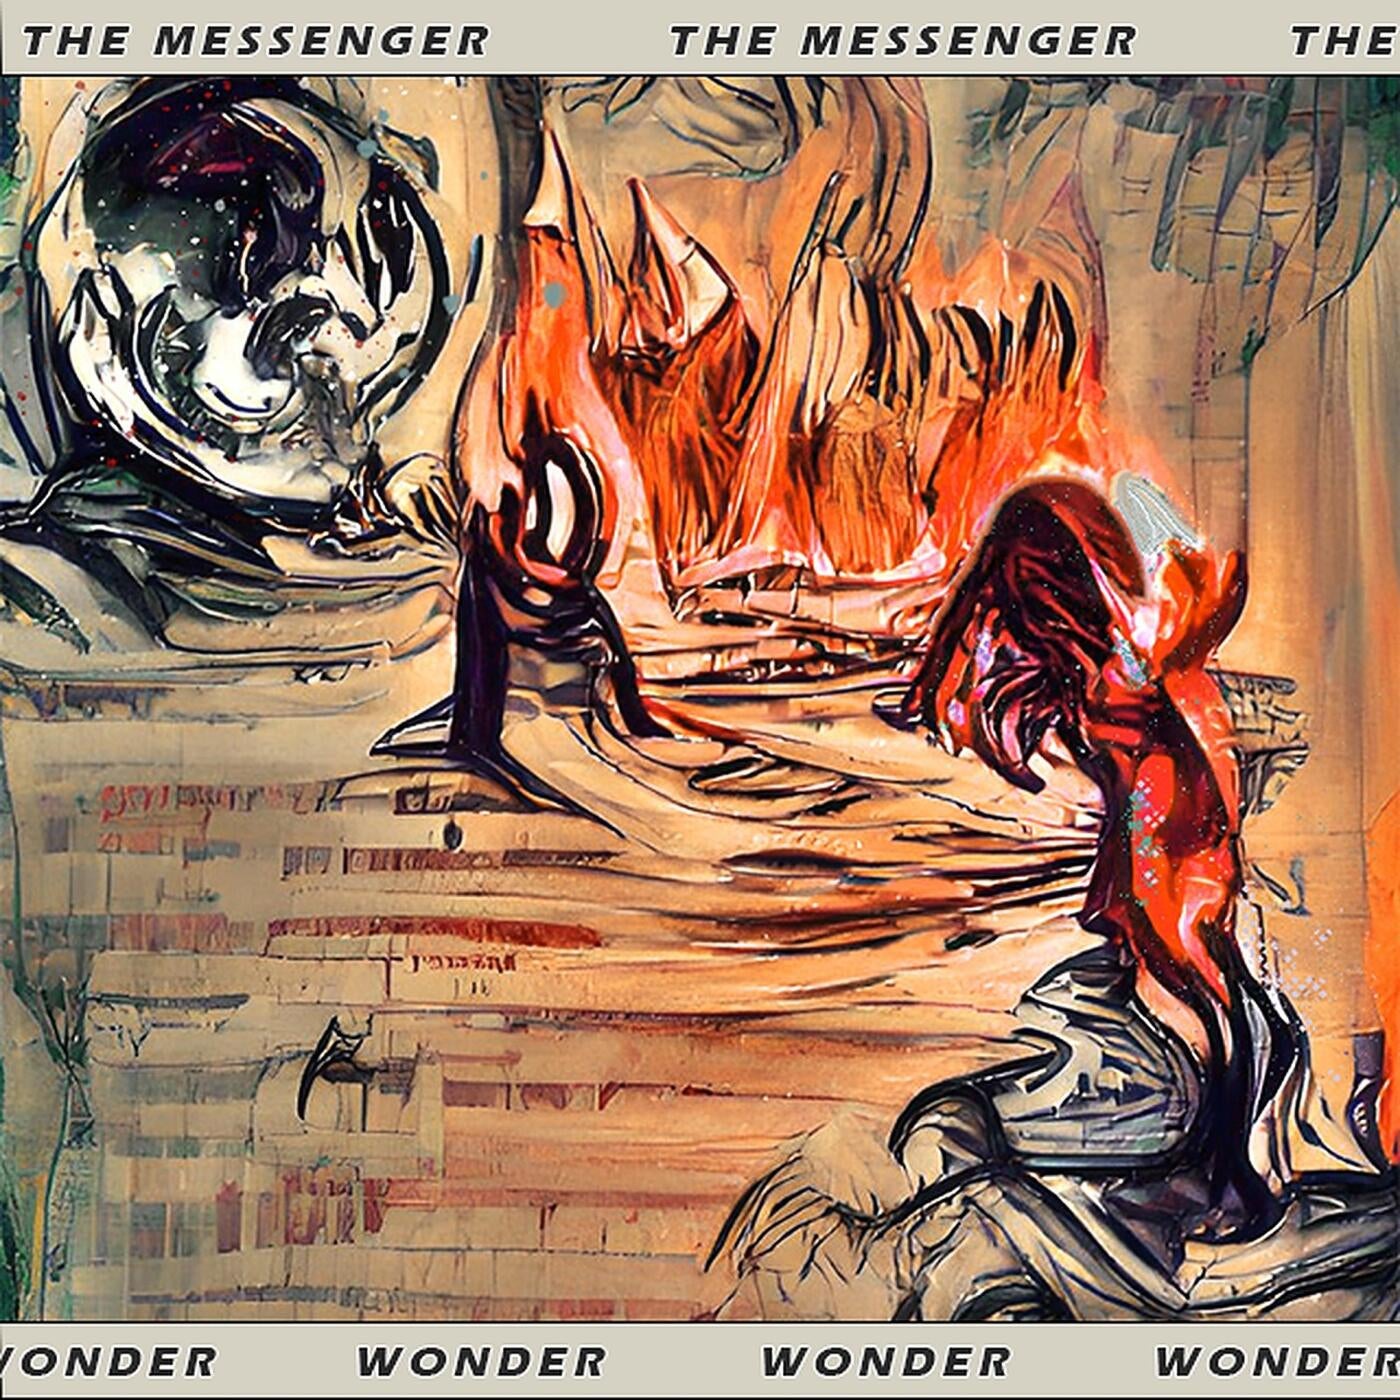 THE MESSENGER ┃ WONDER